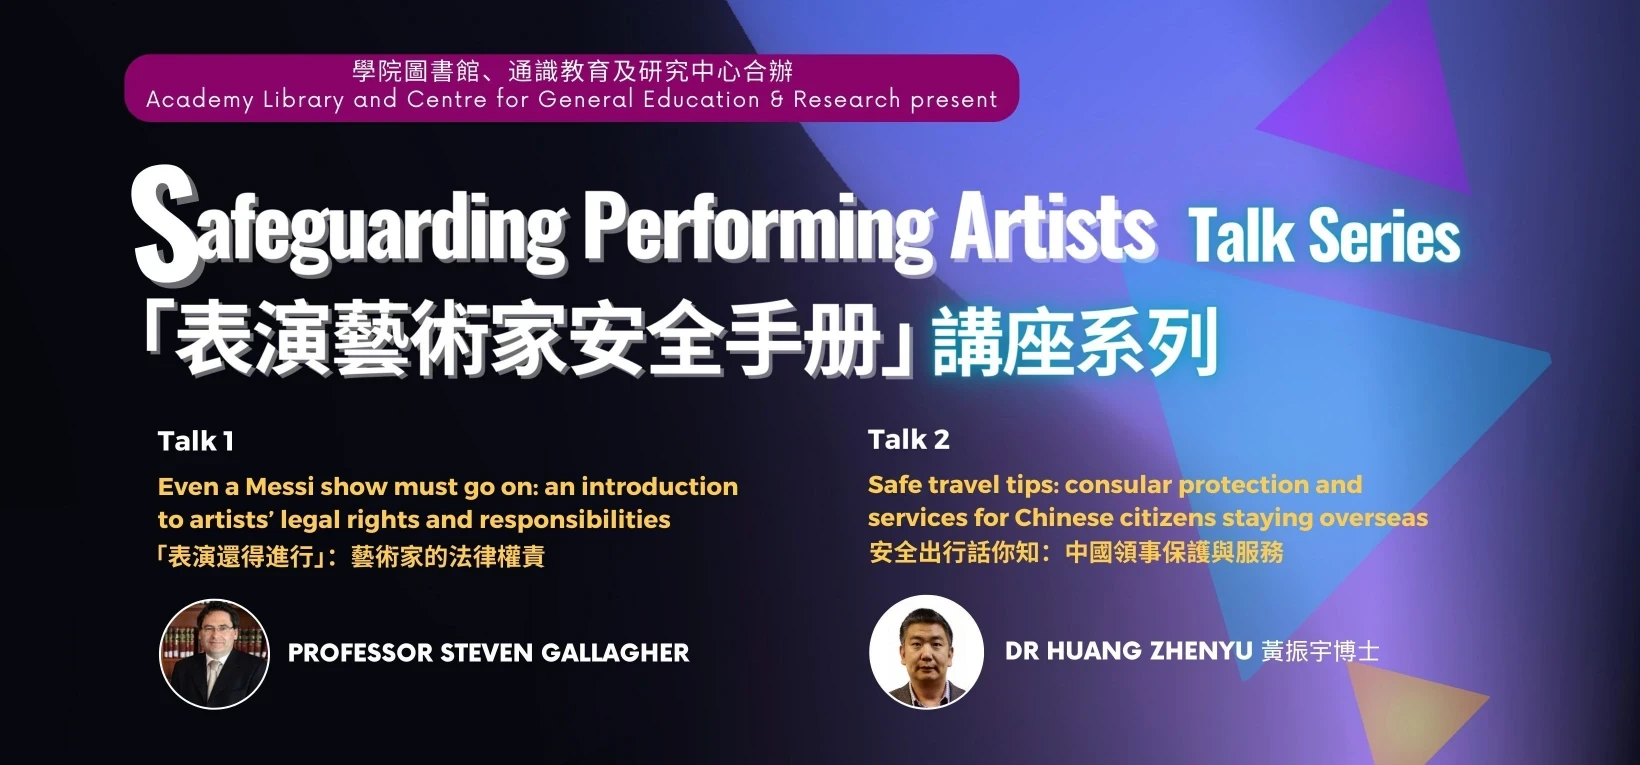 Safeguarding Performing Artists Talk Series